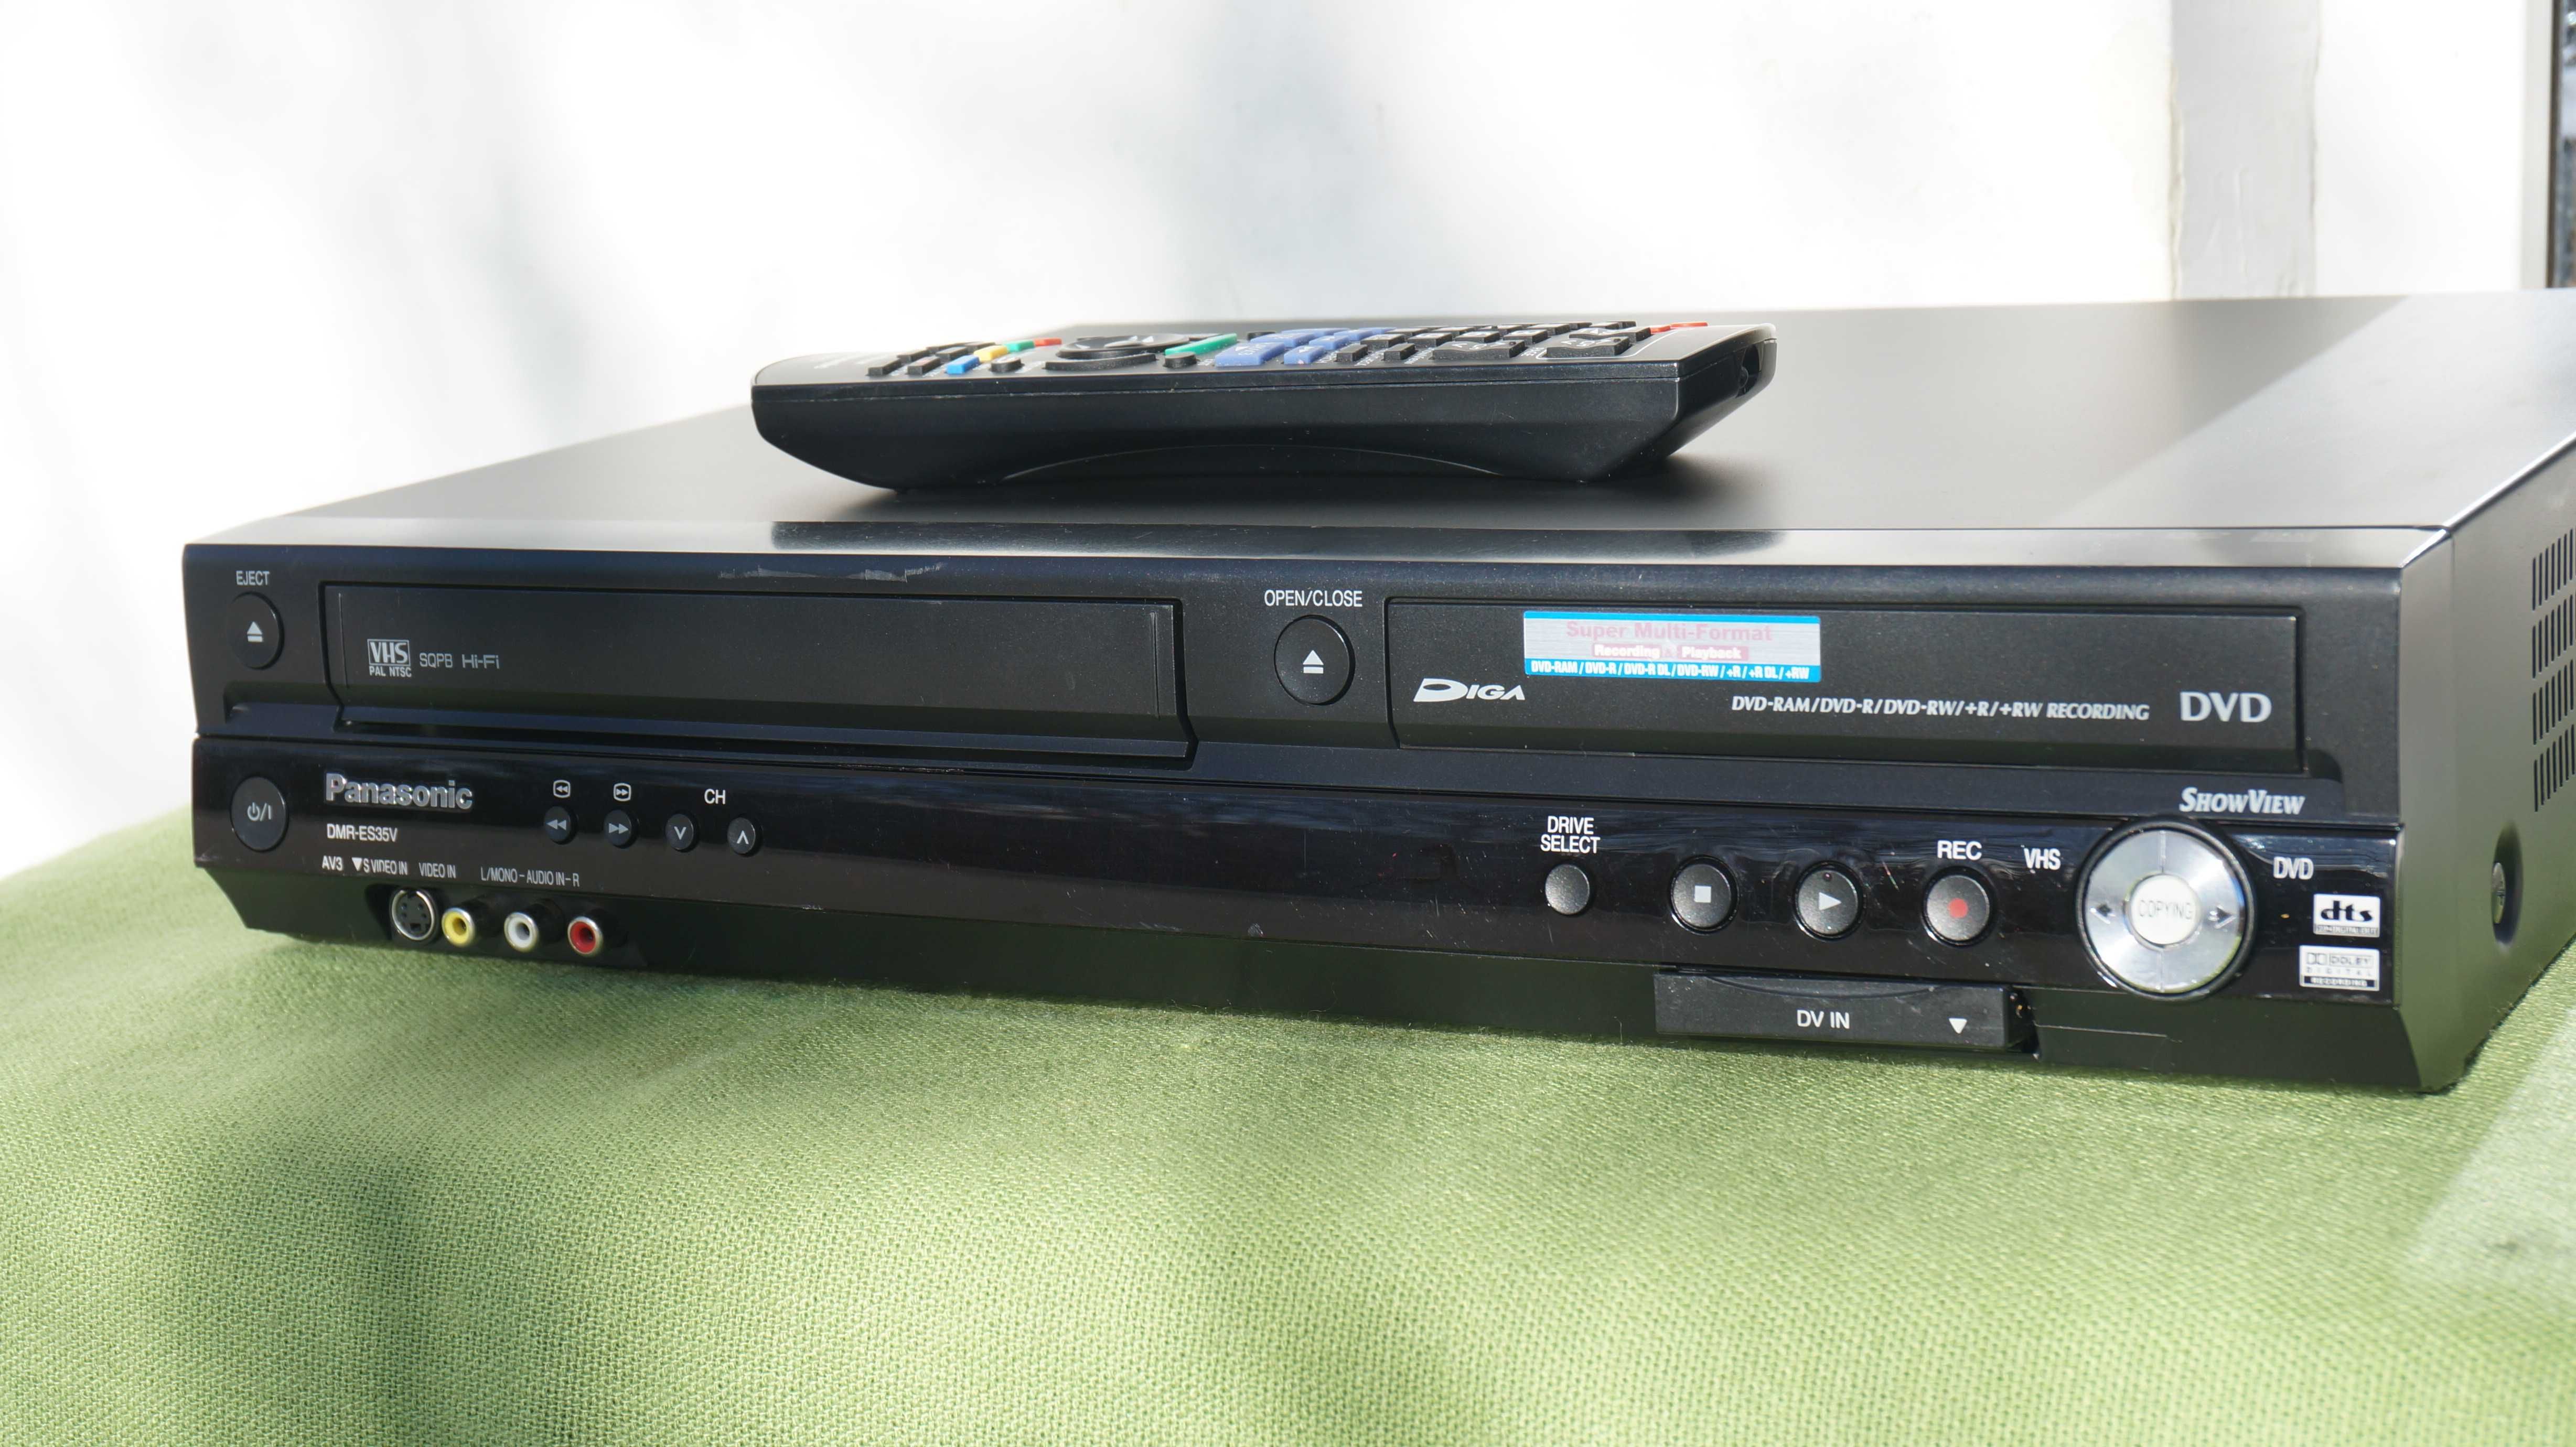 DVD recorder combo VHS Panasonic DMR-ES35 stereo Hi-Fi